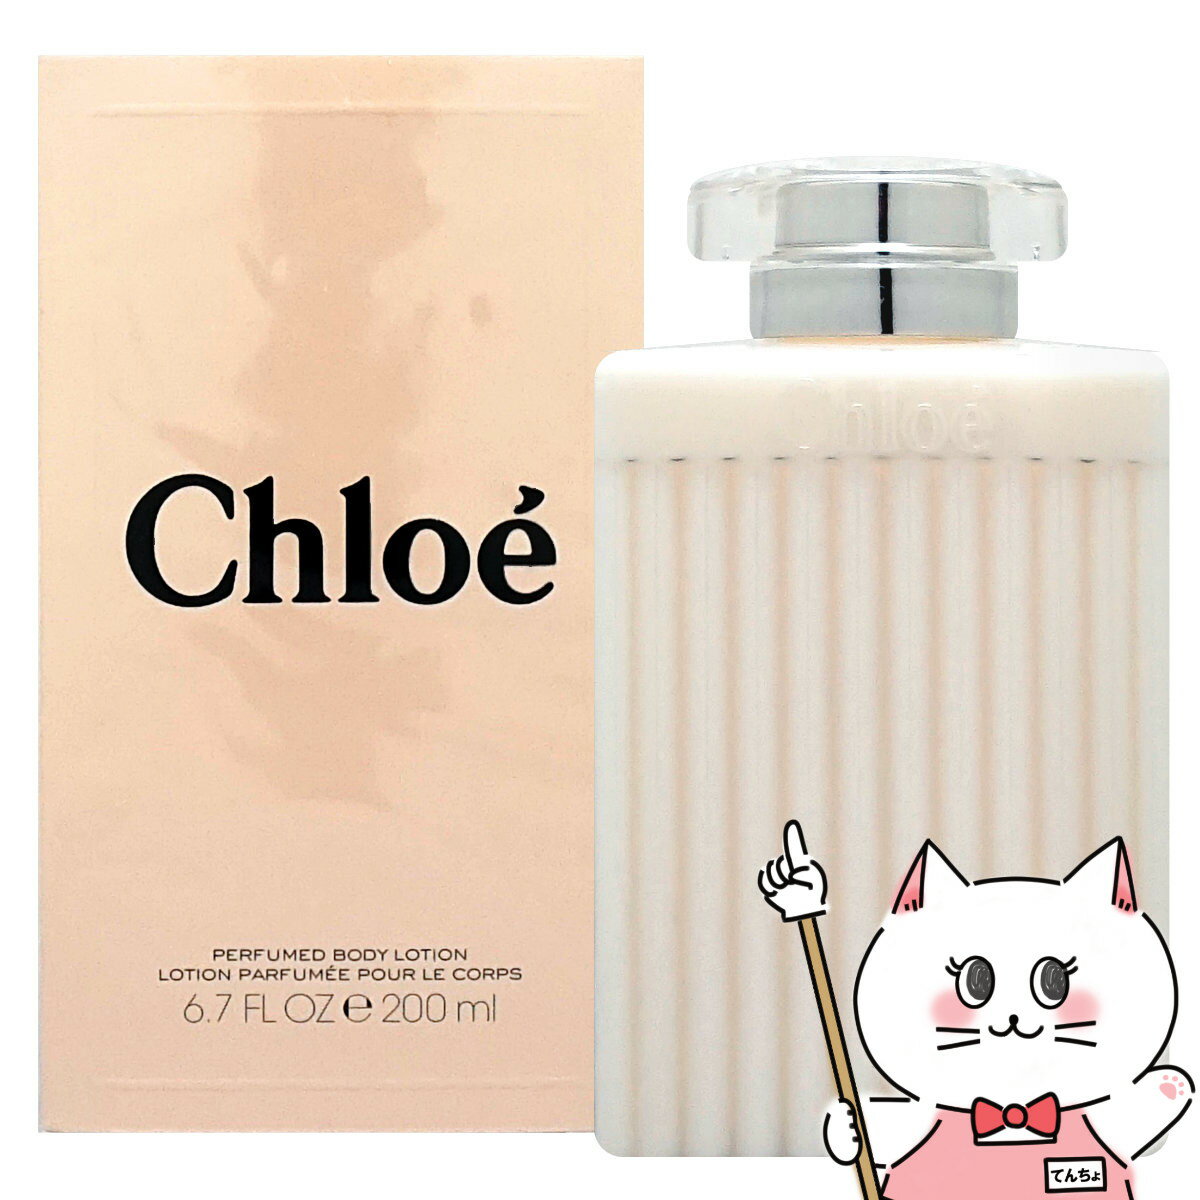 【Chloe】クロエ ボディローション 200ml【宅配便送料無料】 (5000504)